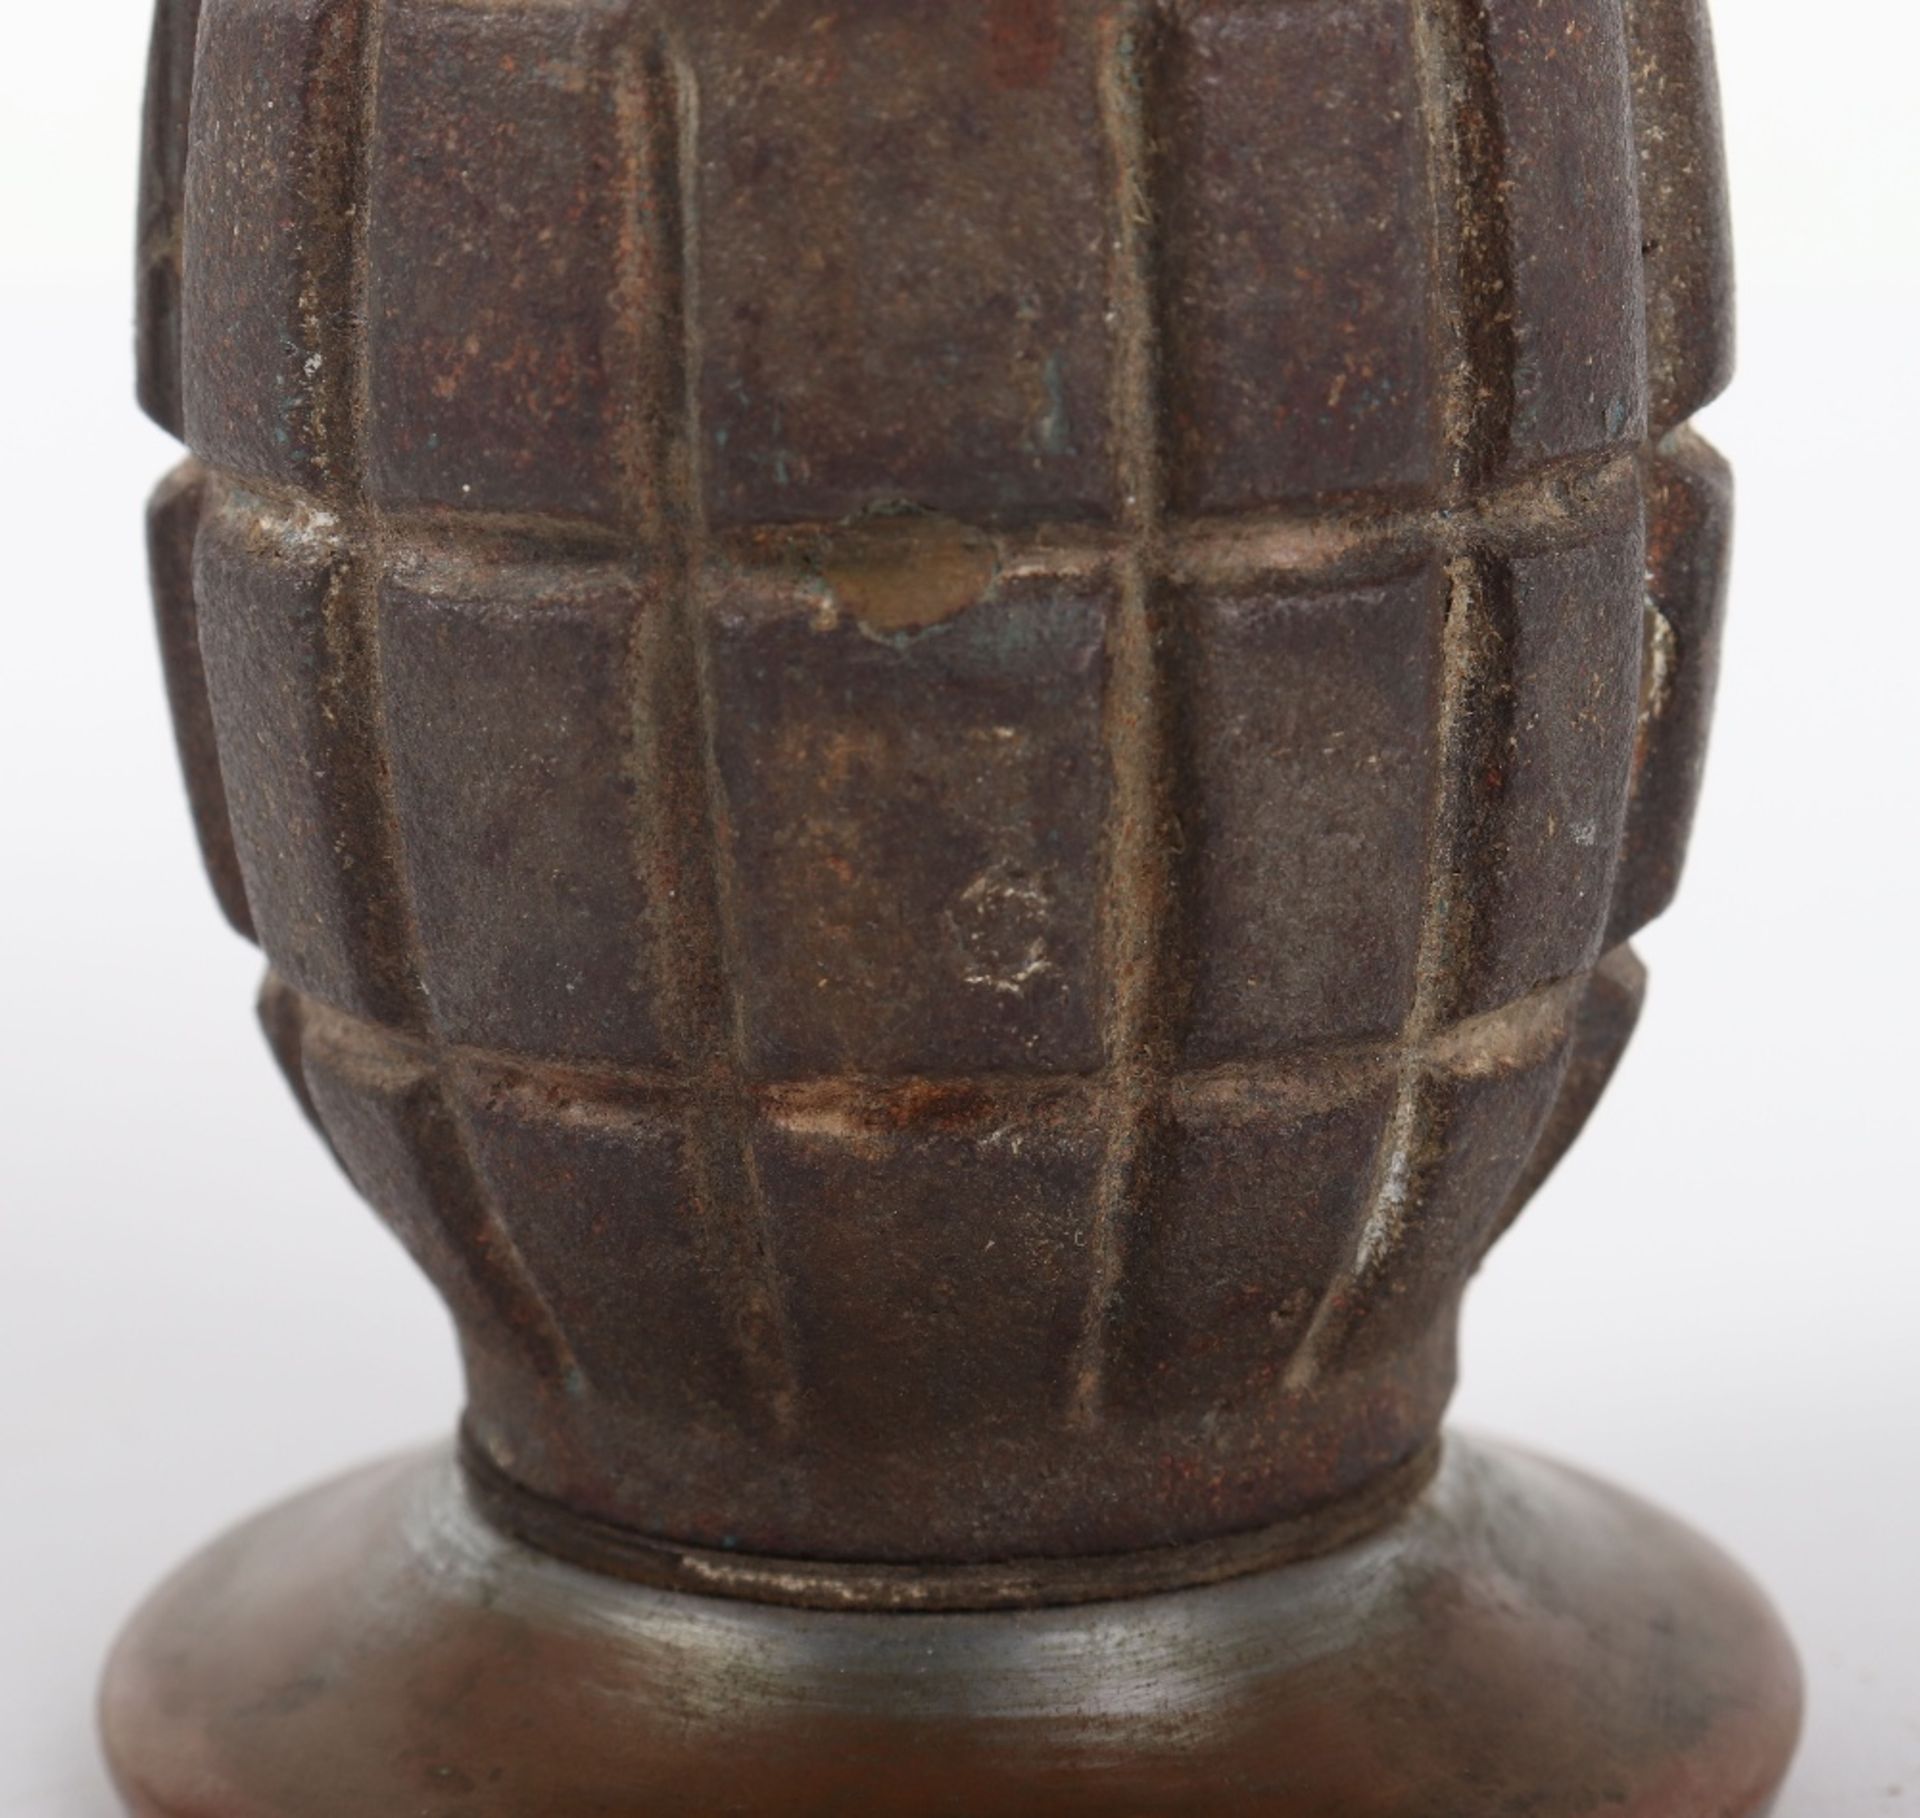 Inert British Mills Grenade Converted to Table Lighter - Image 3 of 6